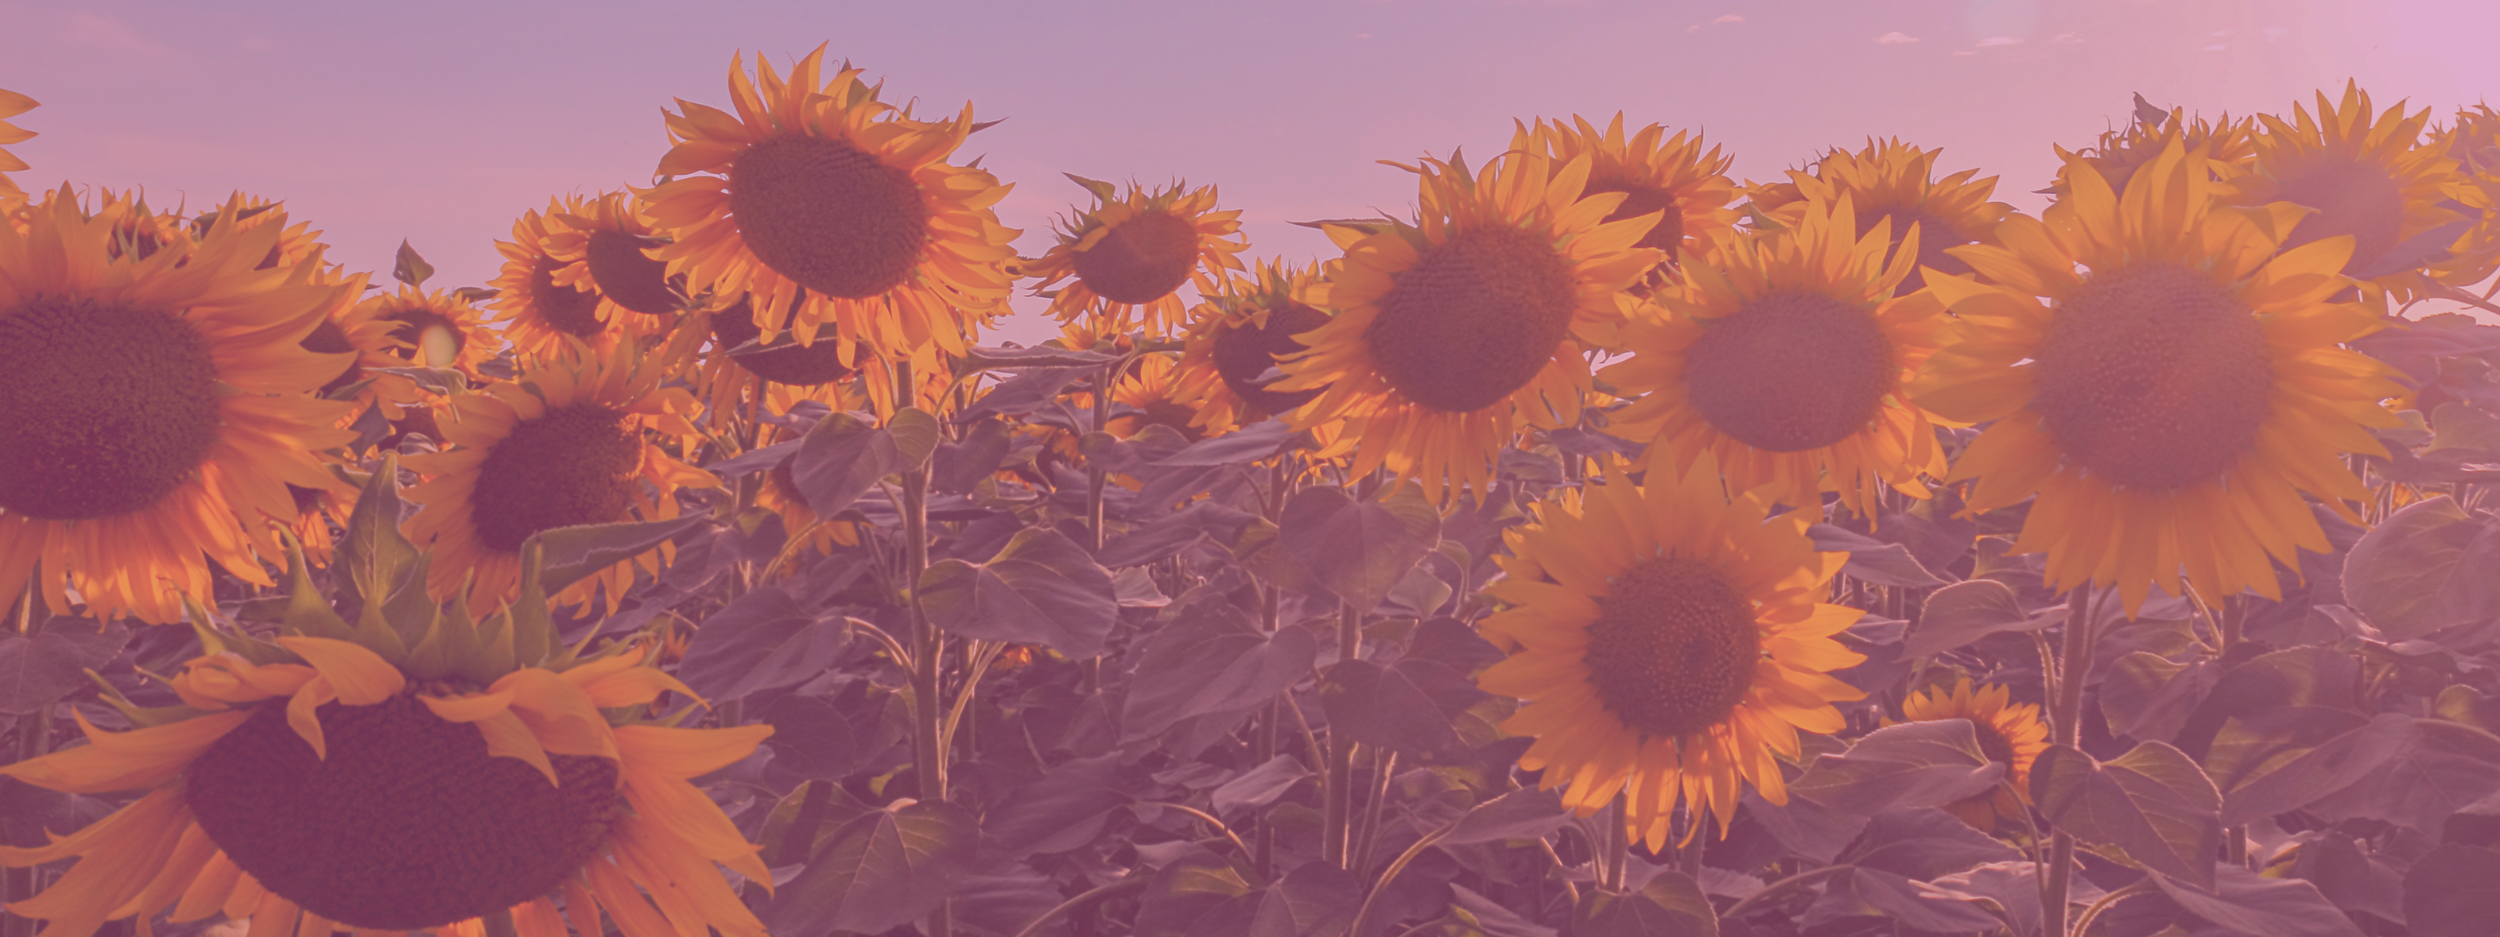 sunflowers (2) - wide